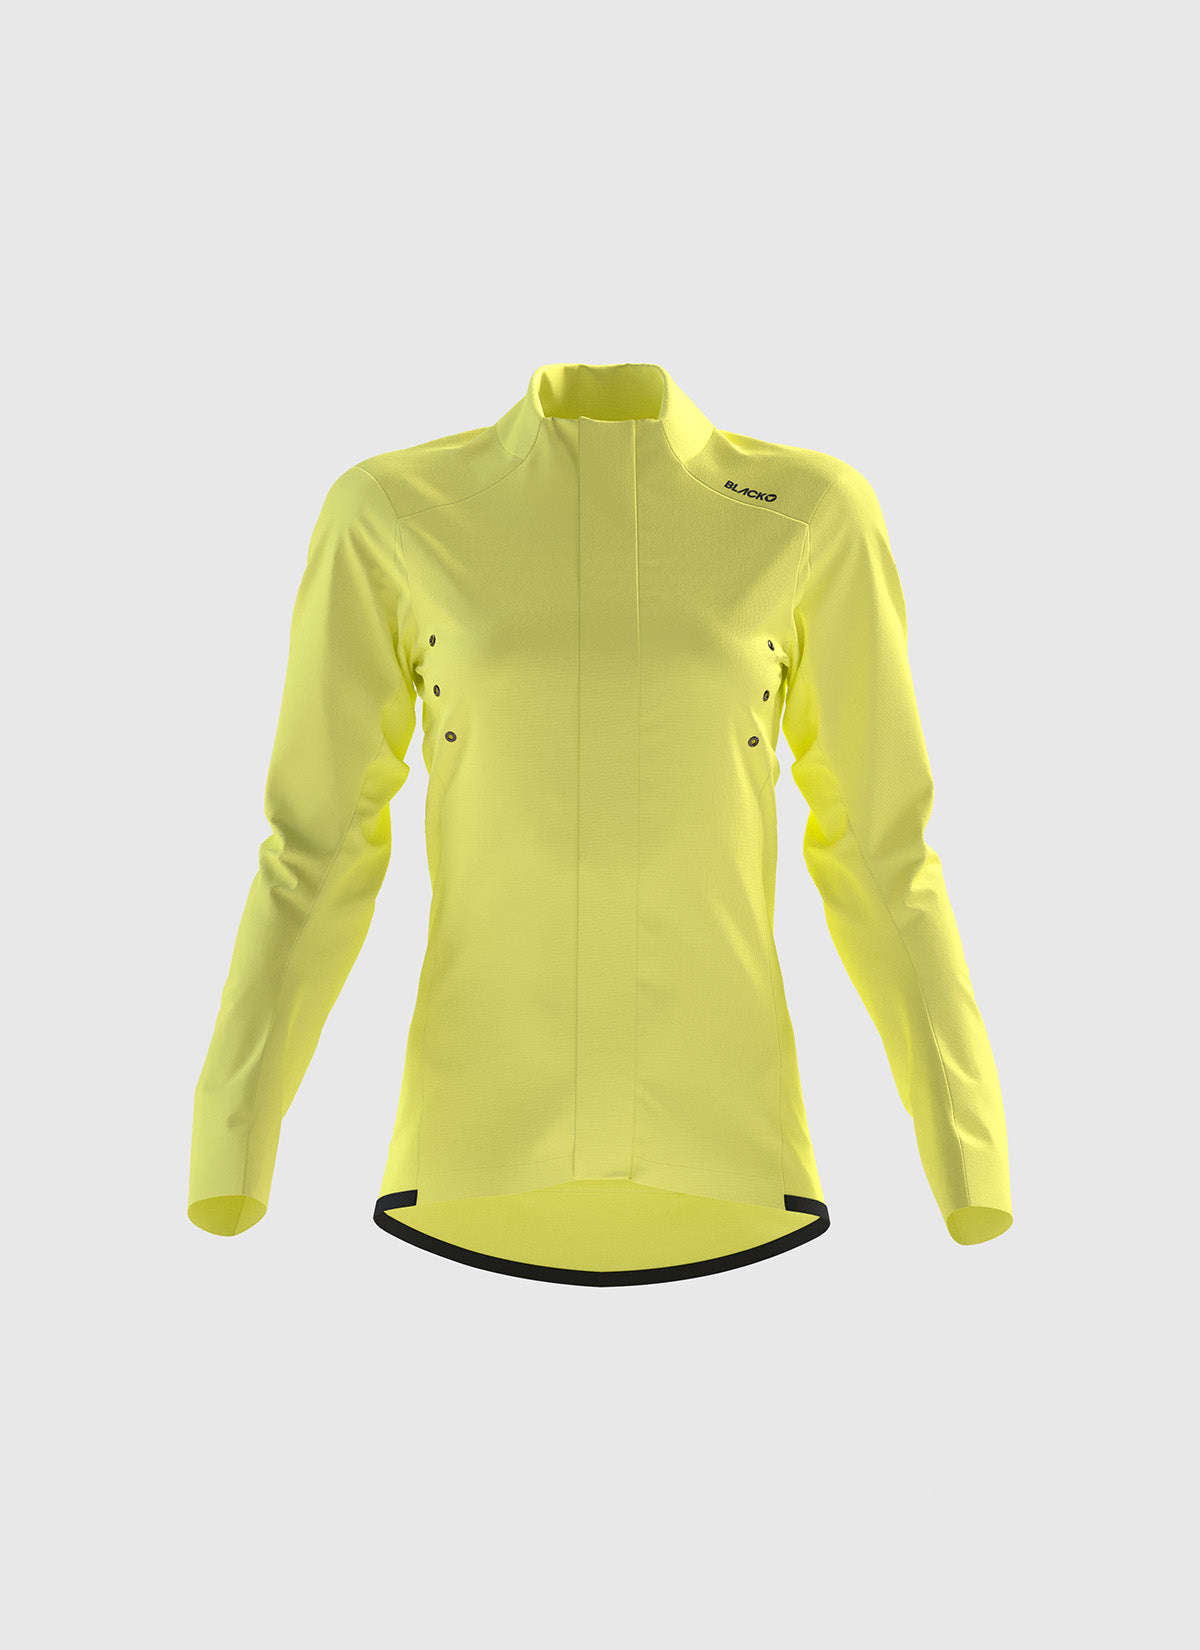 Women's Elements Micro Jacket - Yellow